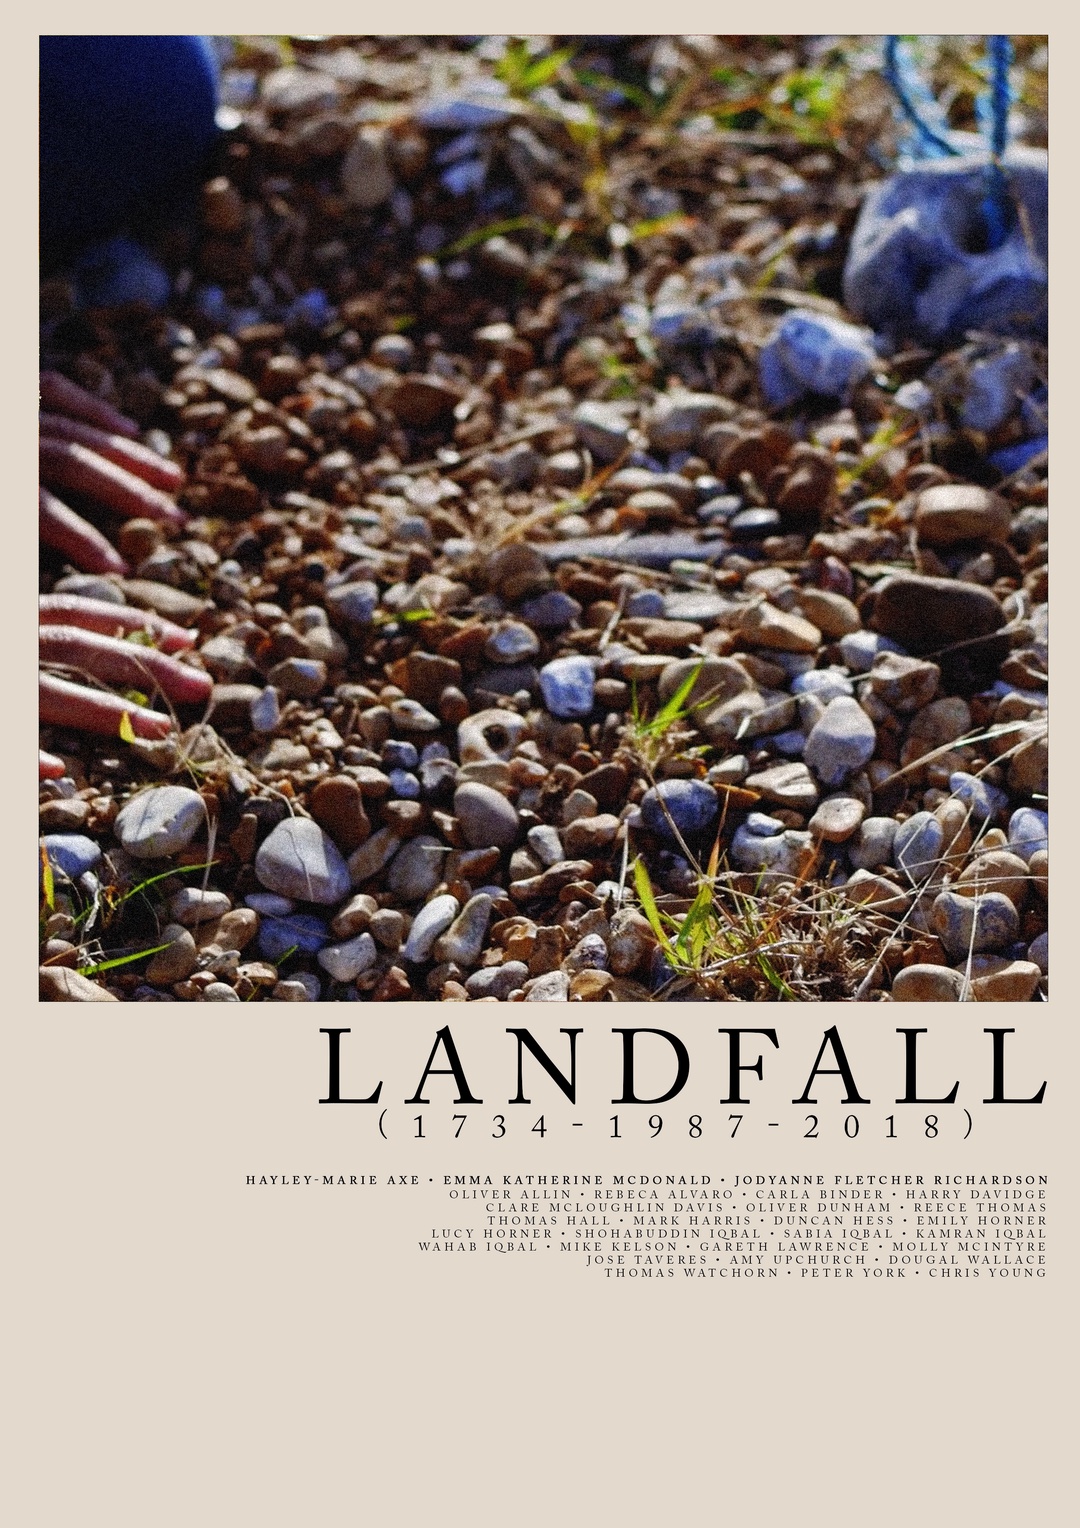 Landfall (1734-1987-2018)